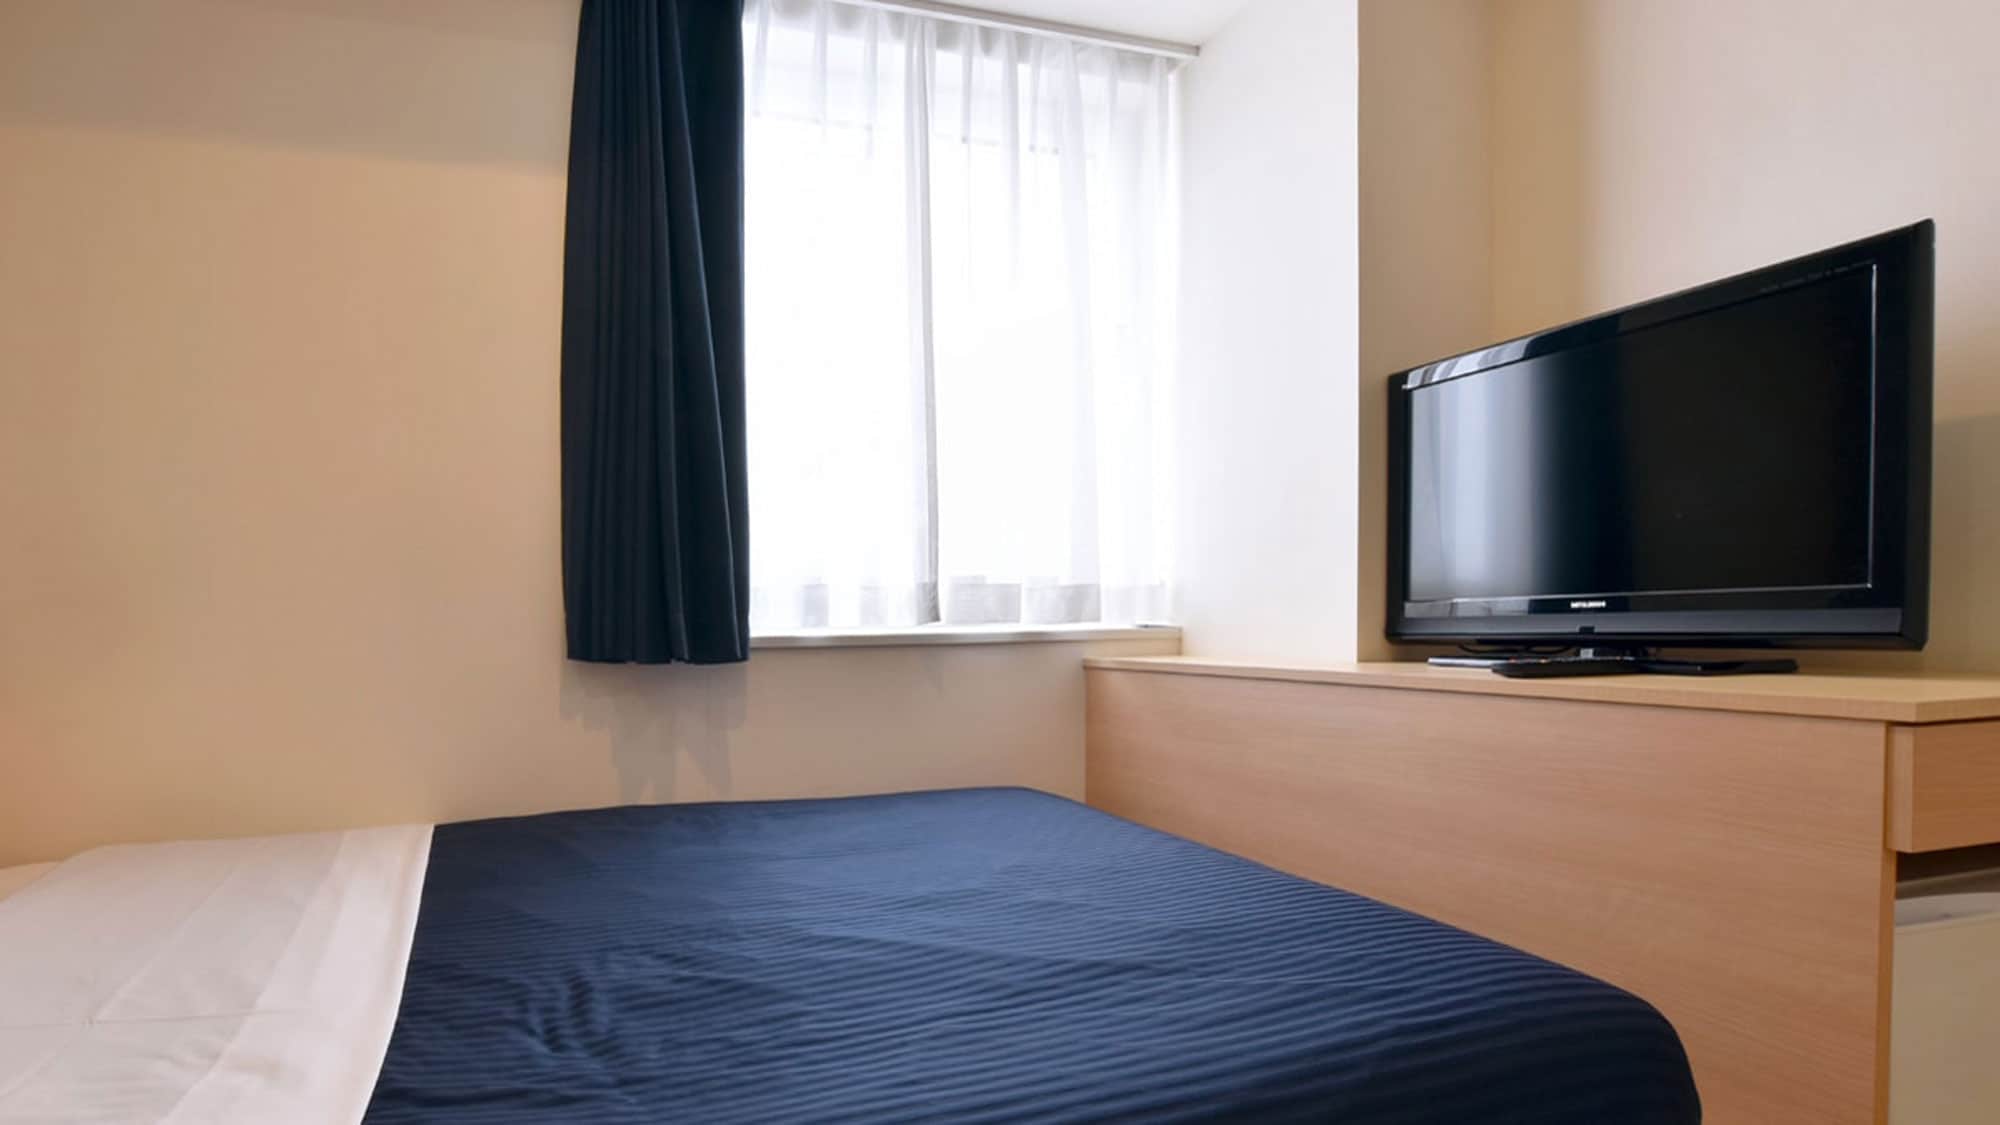 [Single] มีเตียงใหญ่ไว้บริการเพื่อให้คุณได้พักผ่อนและผ่อนคลาย